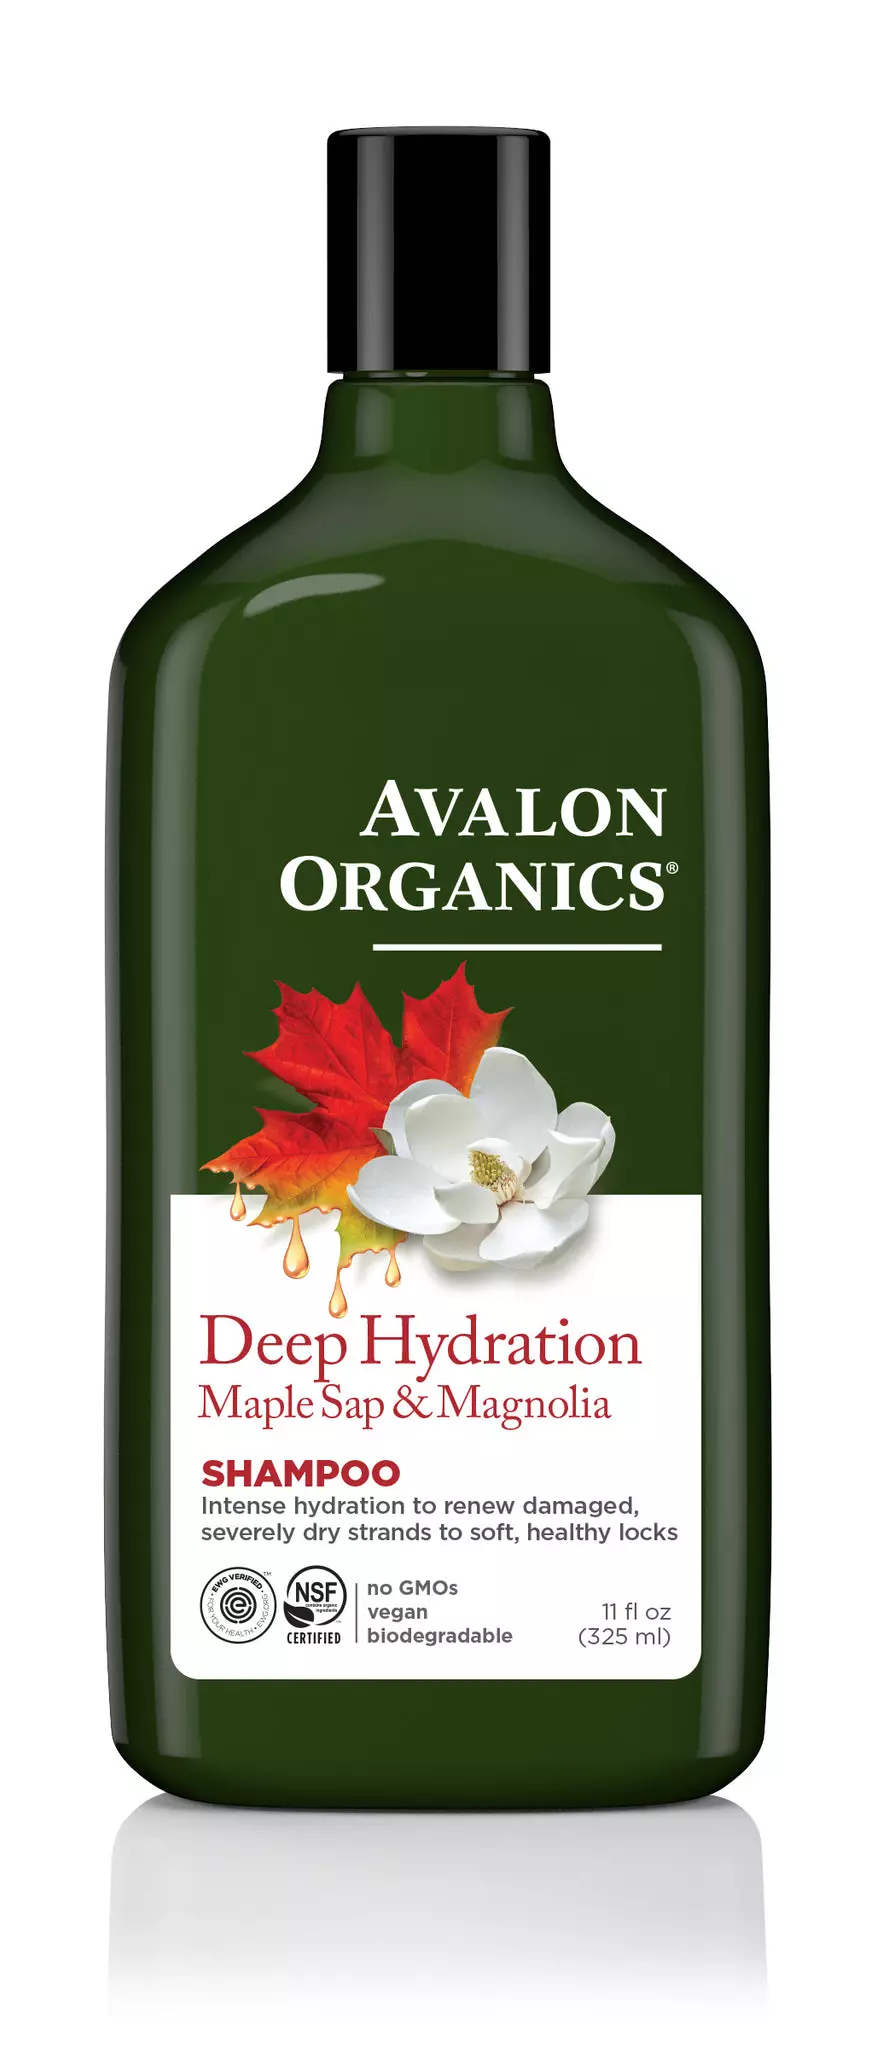 Avalon Organics Deep Hydration Maple Sap & Magnolia Shampoo